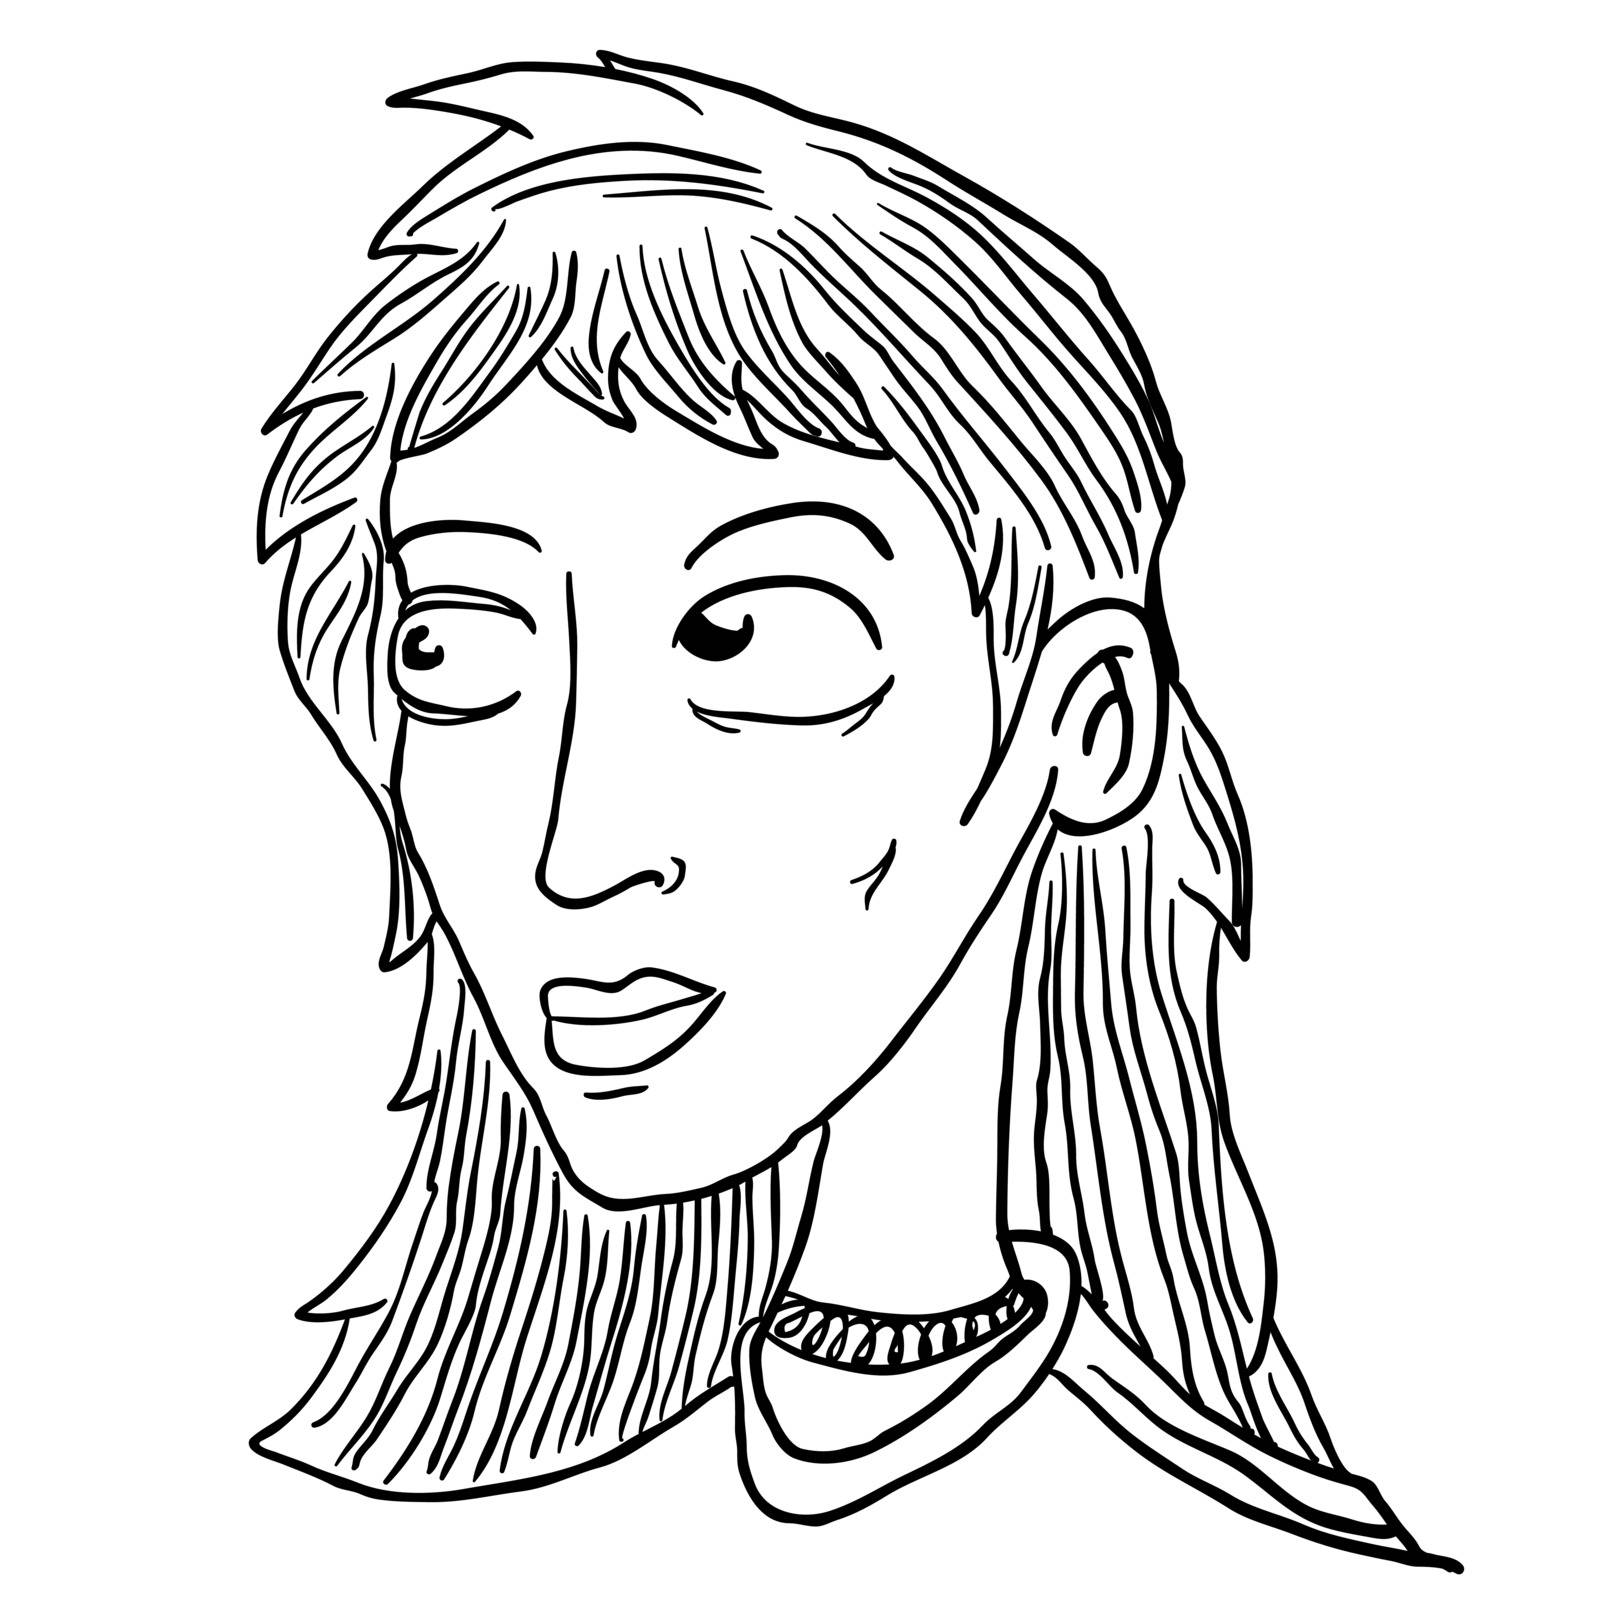 girl head black and white cartoon illustration doodle